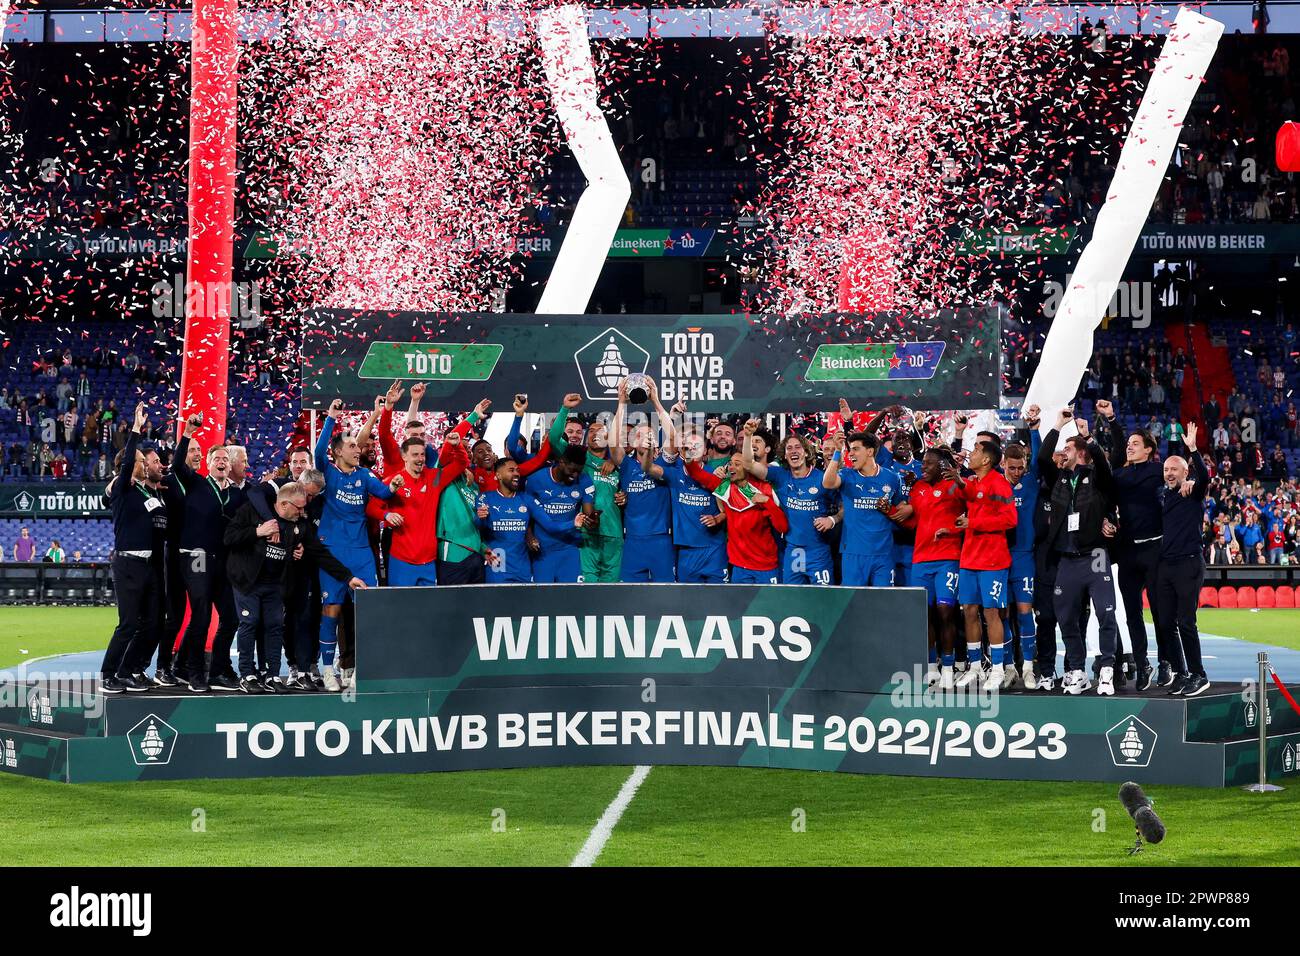 KNVB Beker Finale 2023